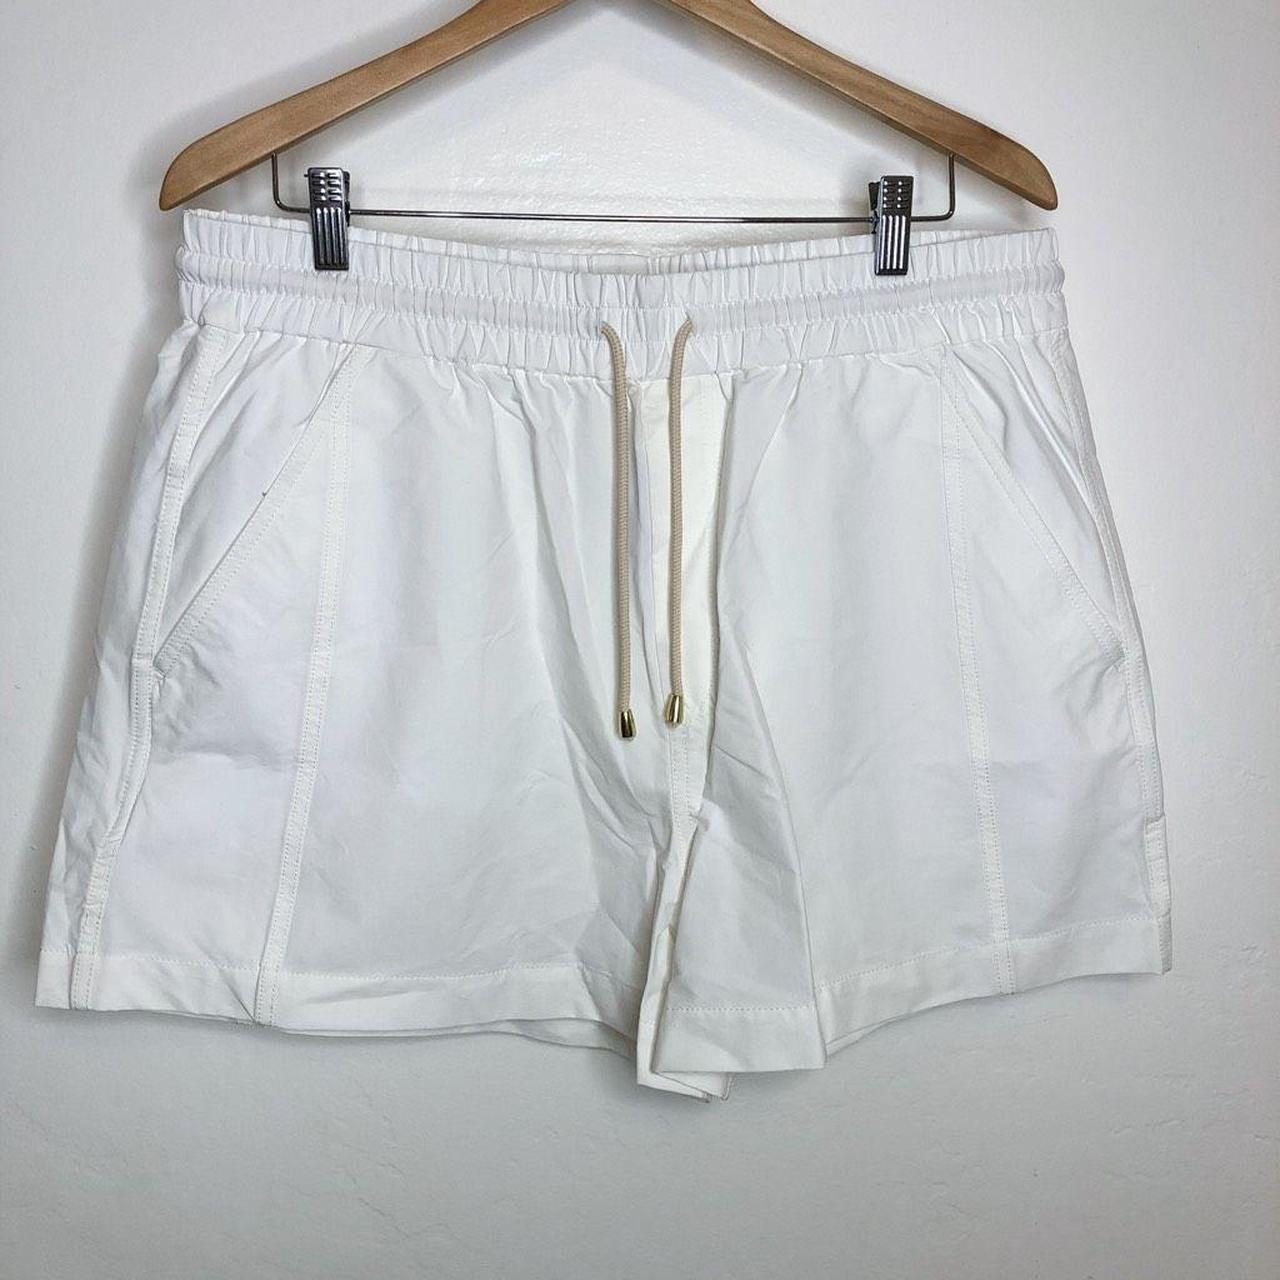 J.Crew Women's White Shorts